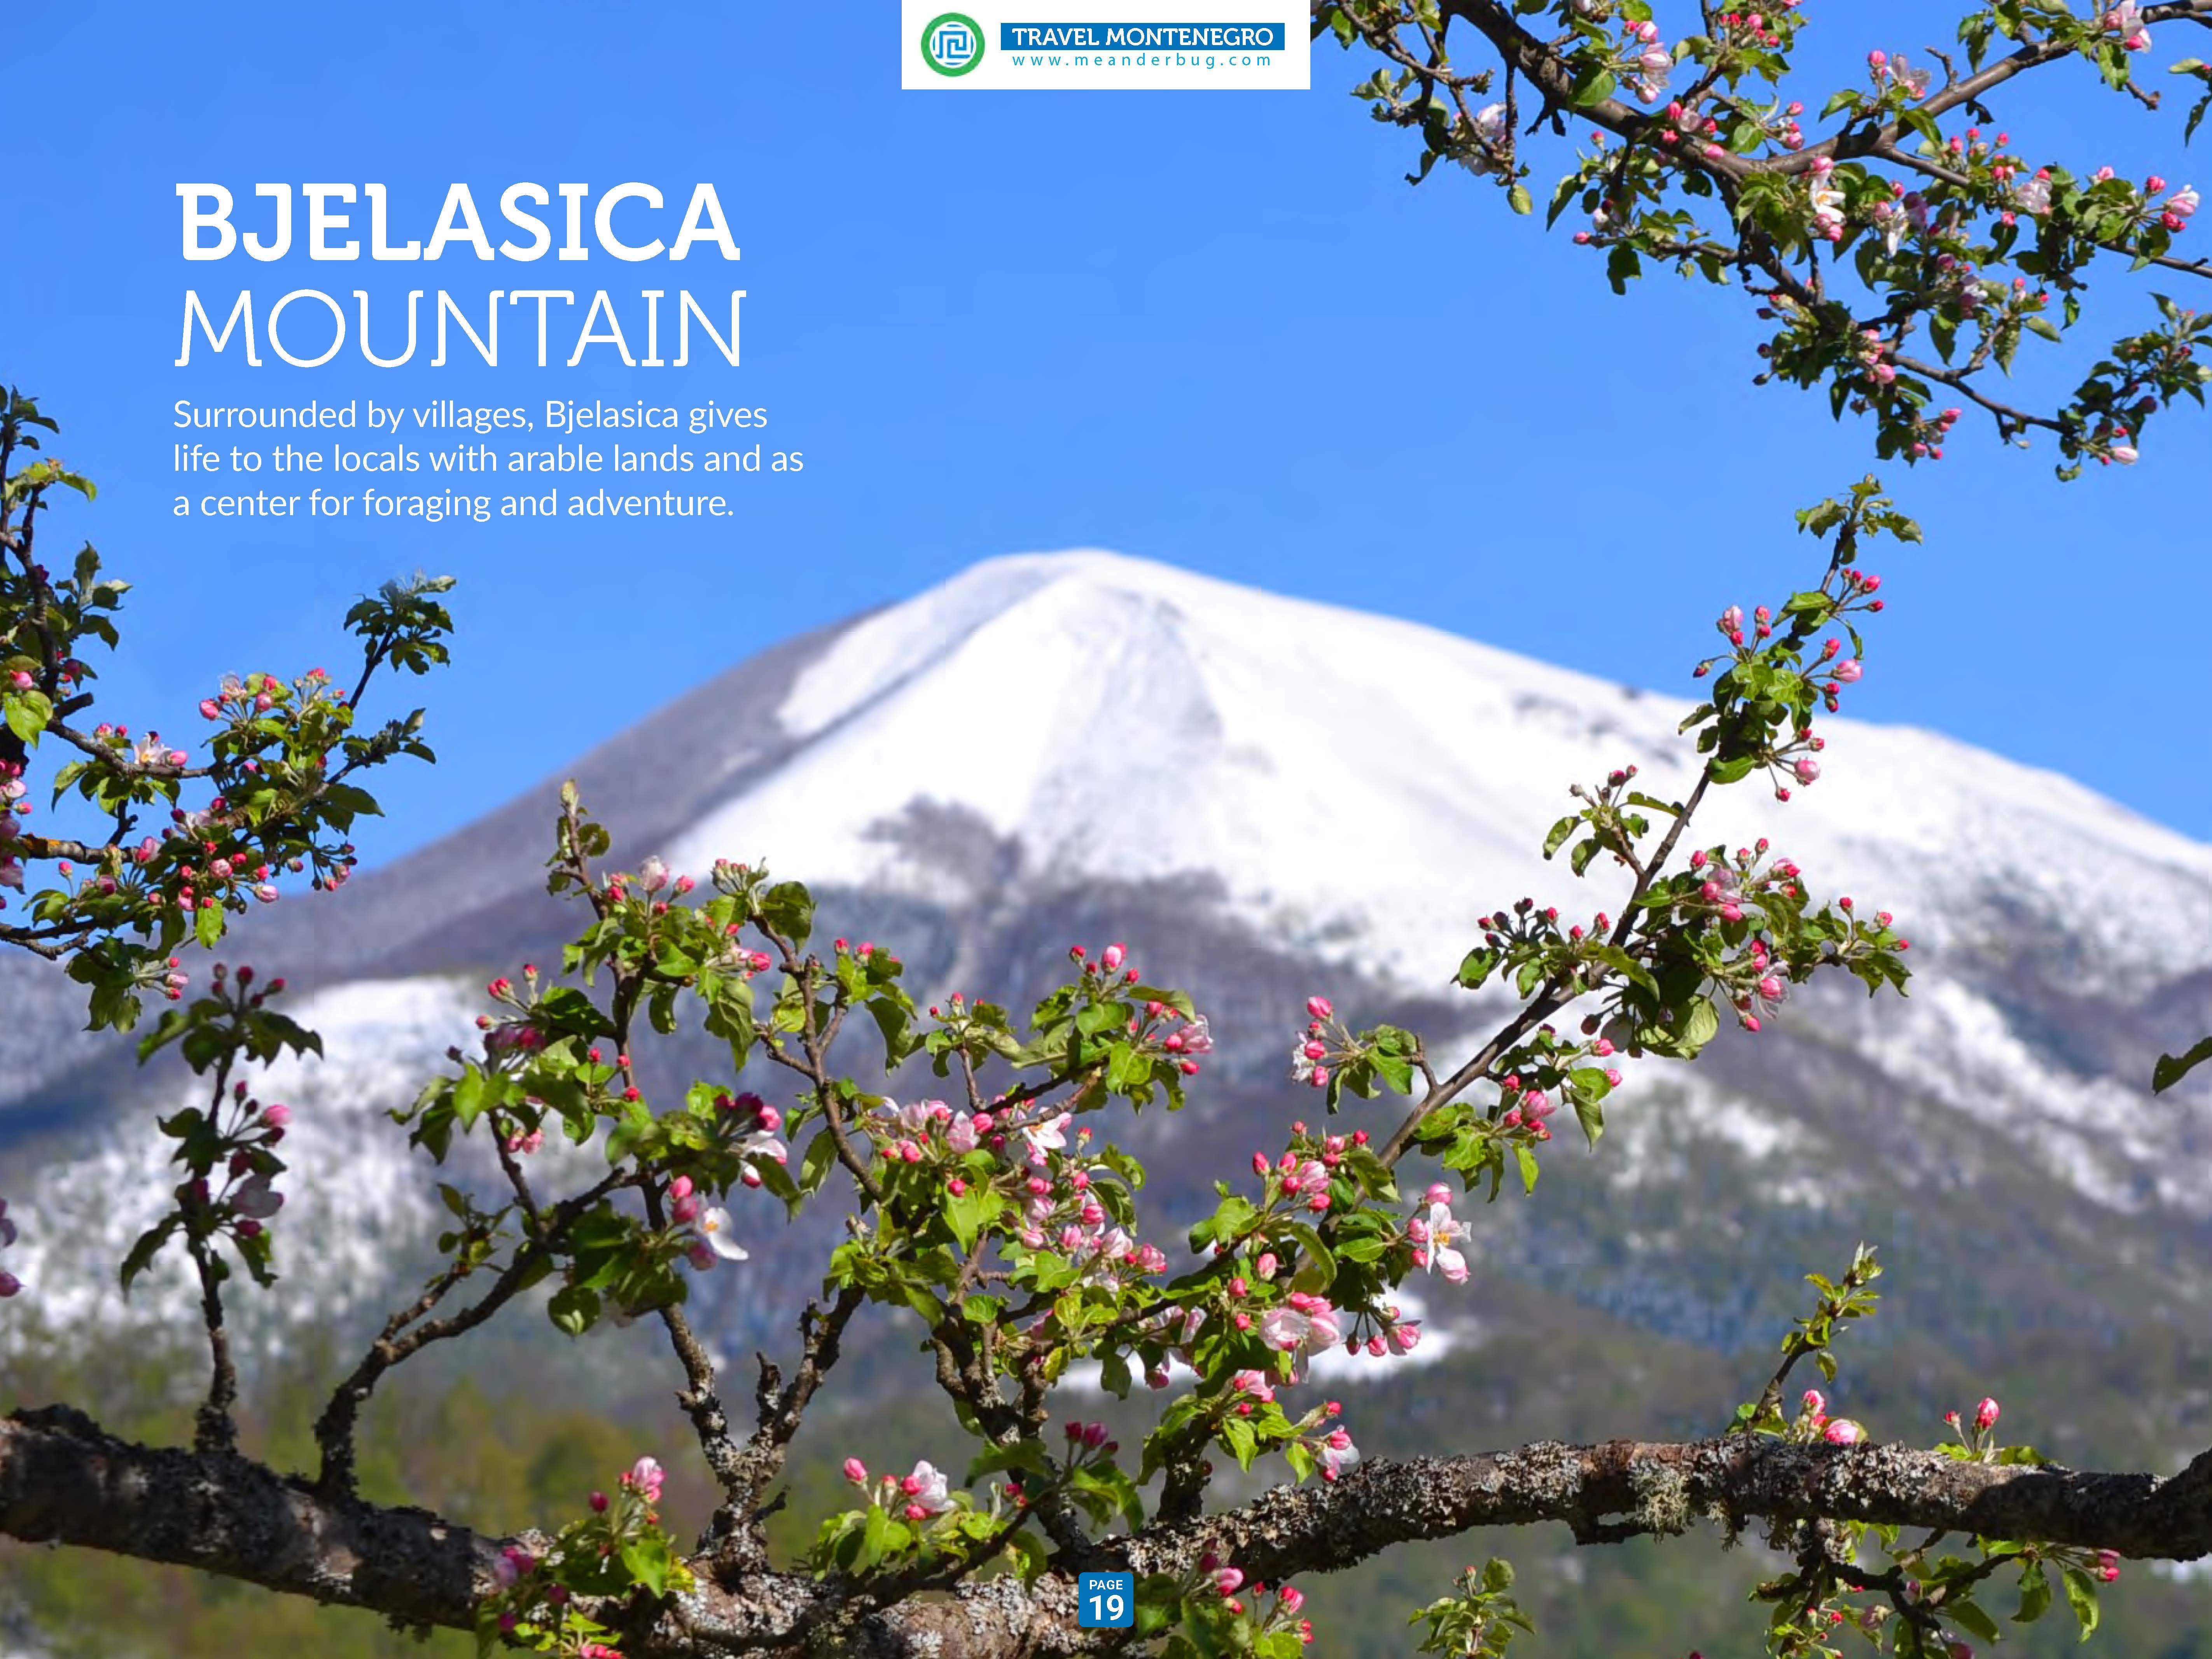 Montenegro Travel Guide - Bjelasica Mountain